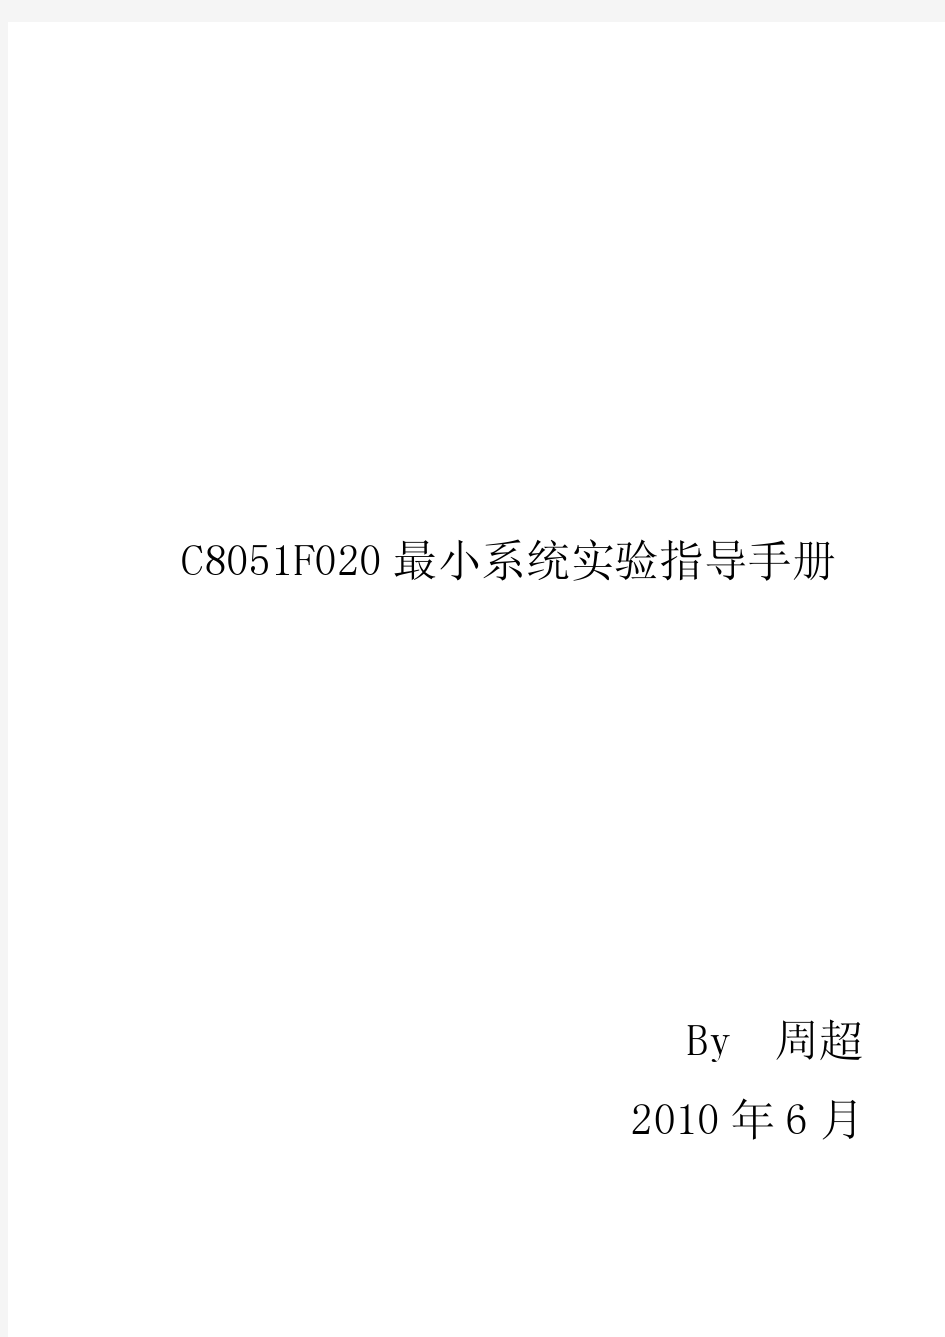 C8051F020 最小系统 实验指导手册